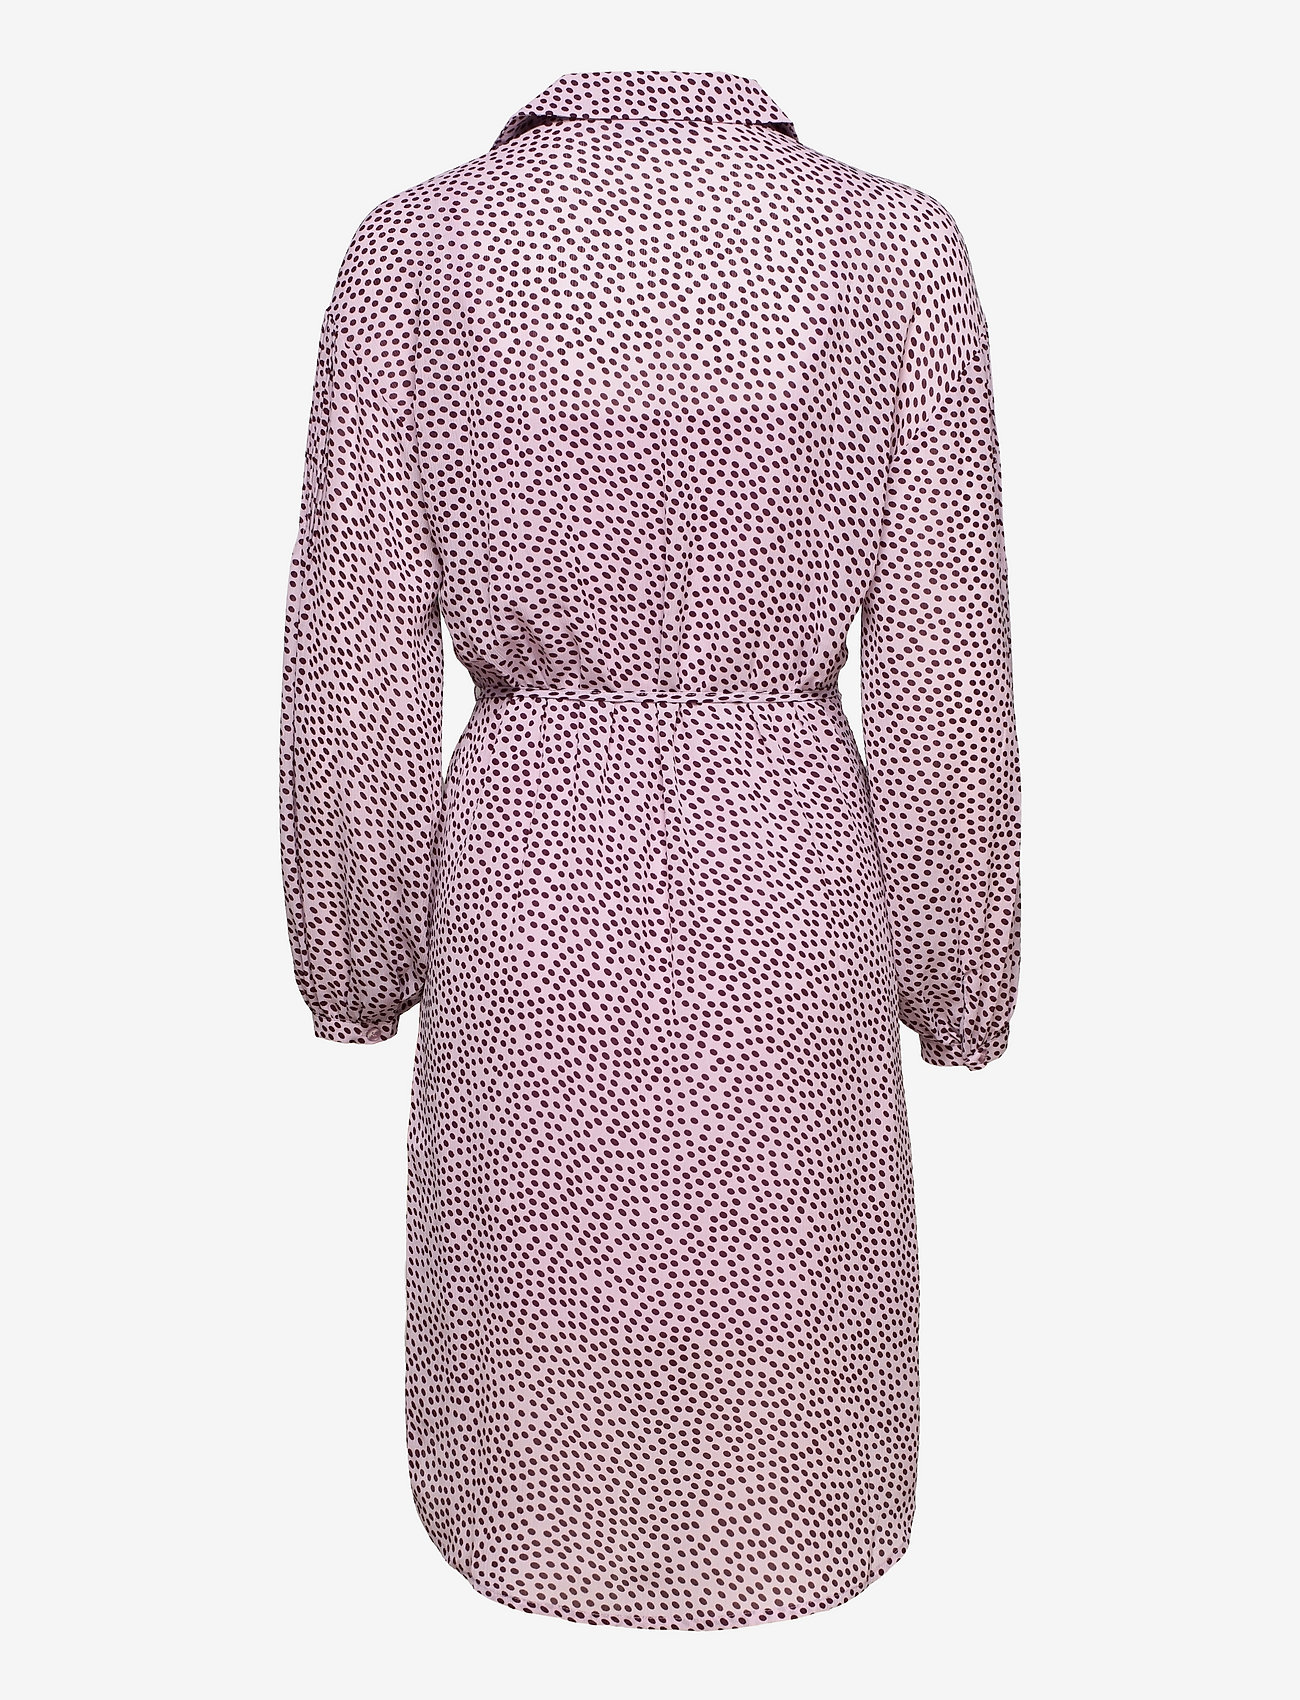 MSCH Copenhagen - Nathea Rikkelie LS Dress AOP - midi-kleider - lavender f dot - 1